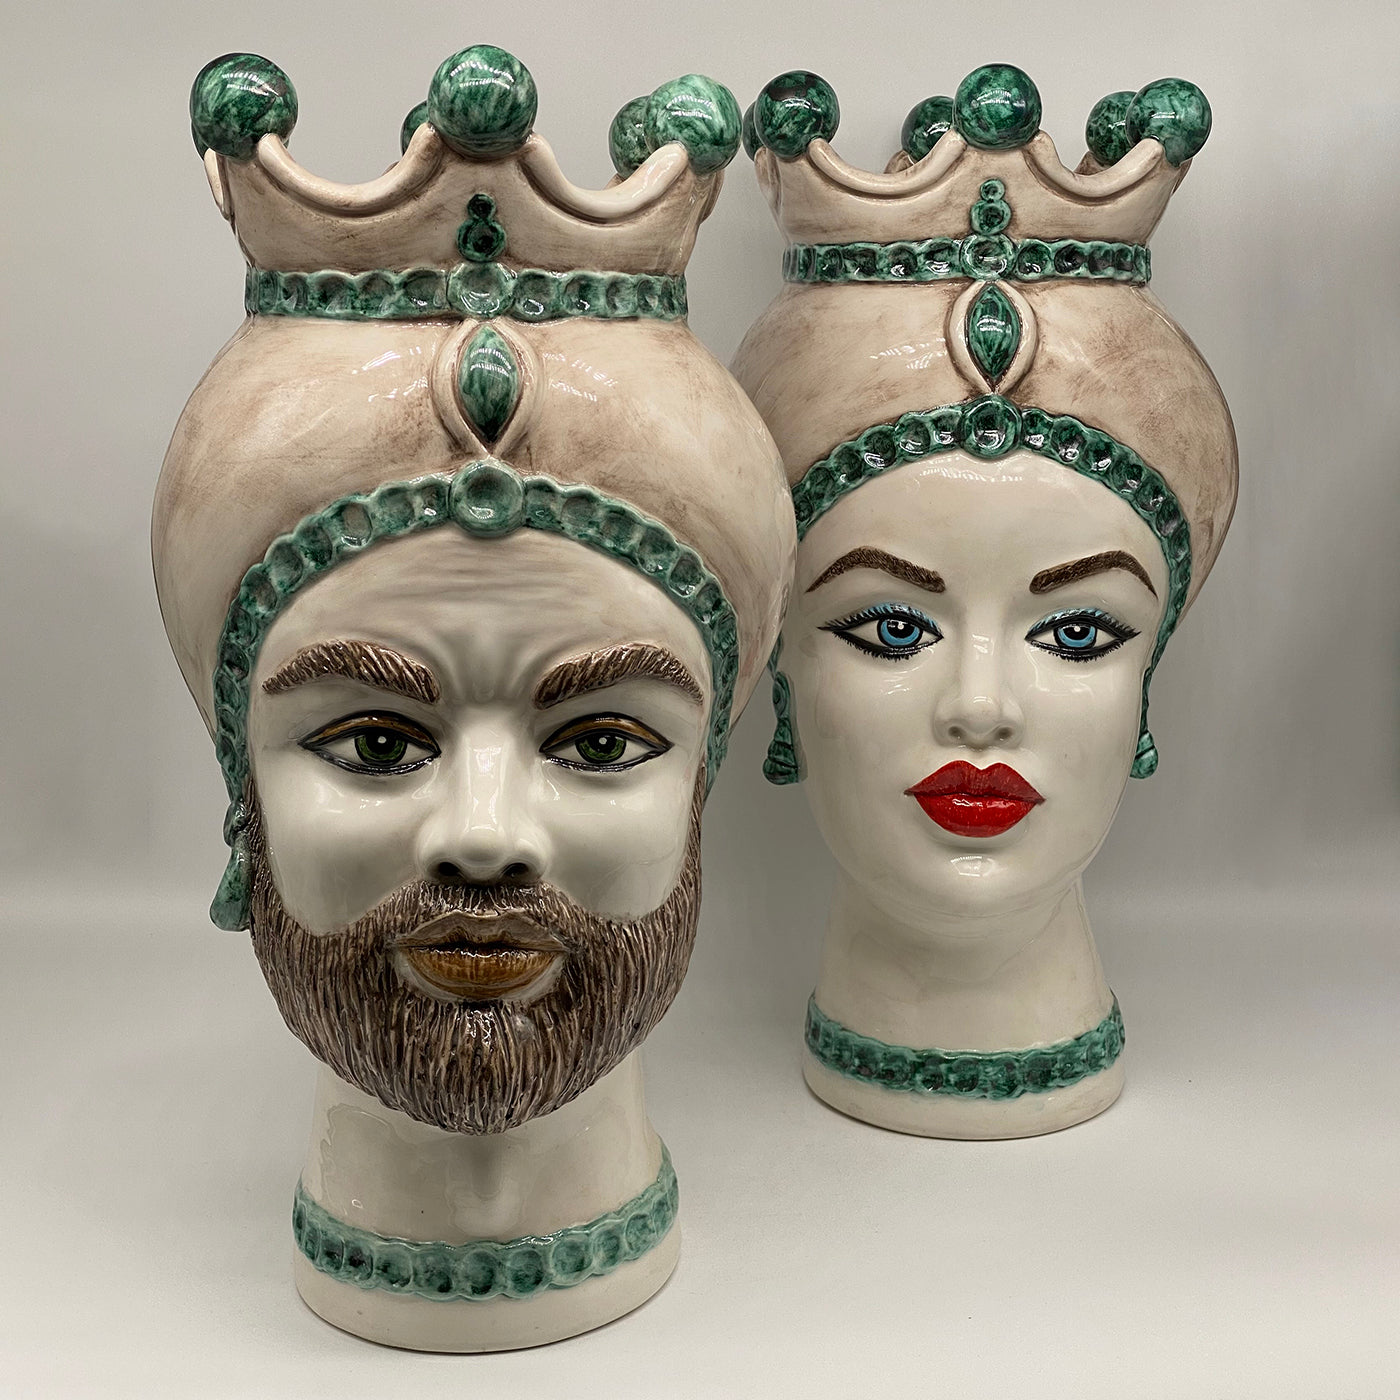 Luis Giant Lady Green Spheres Moor's Head Vase - Alternative view 1